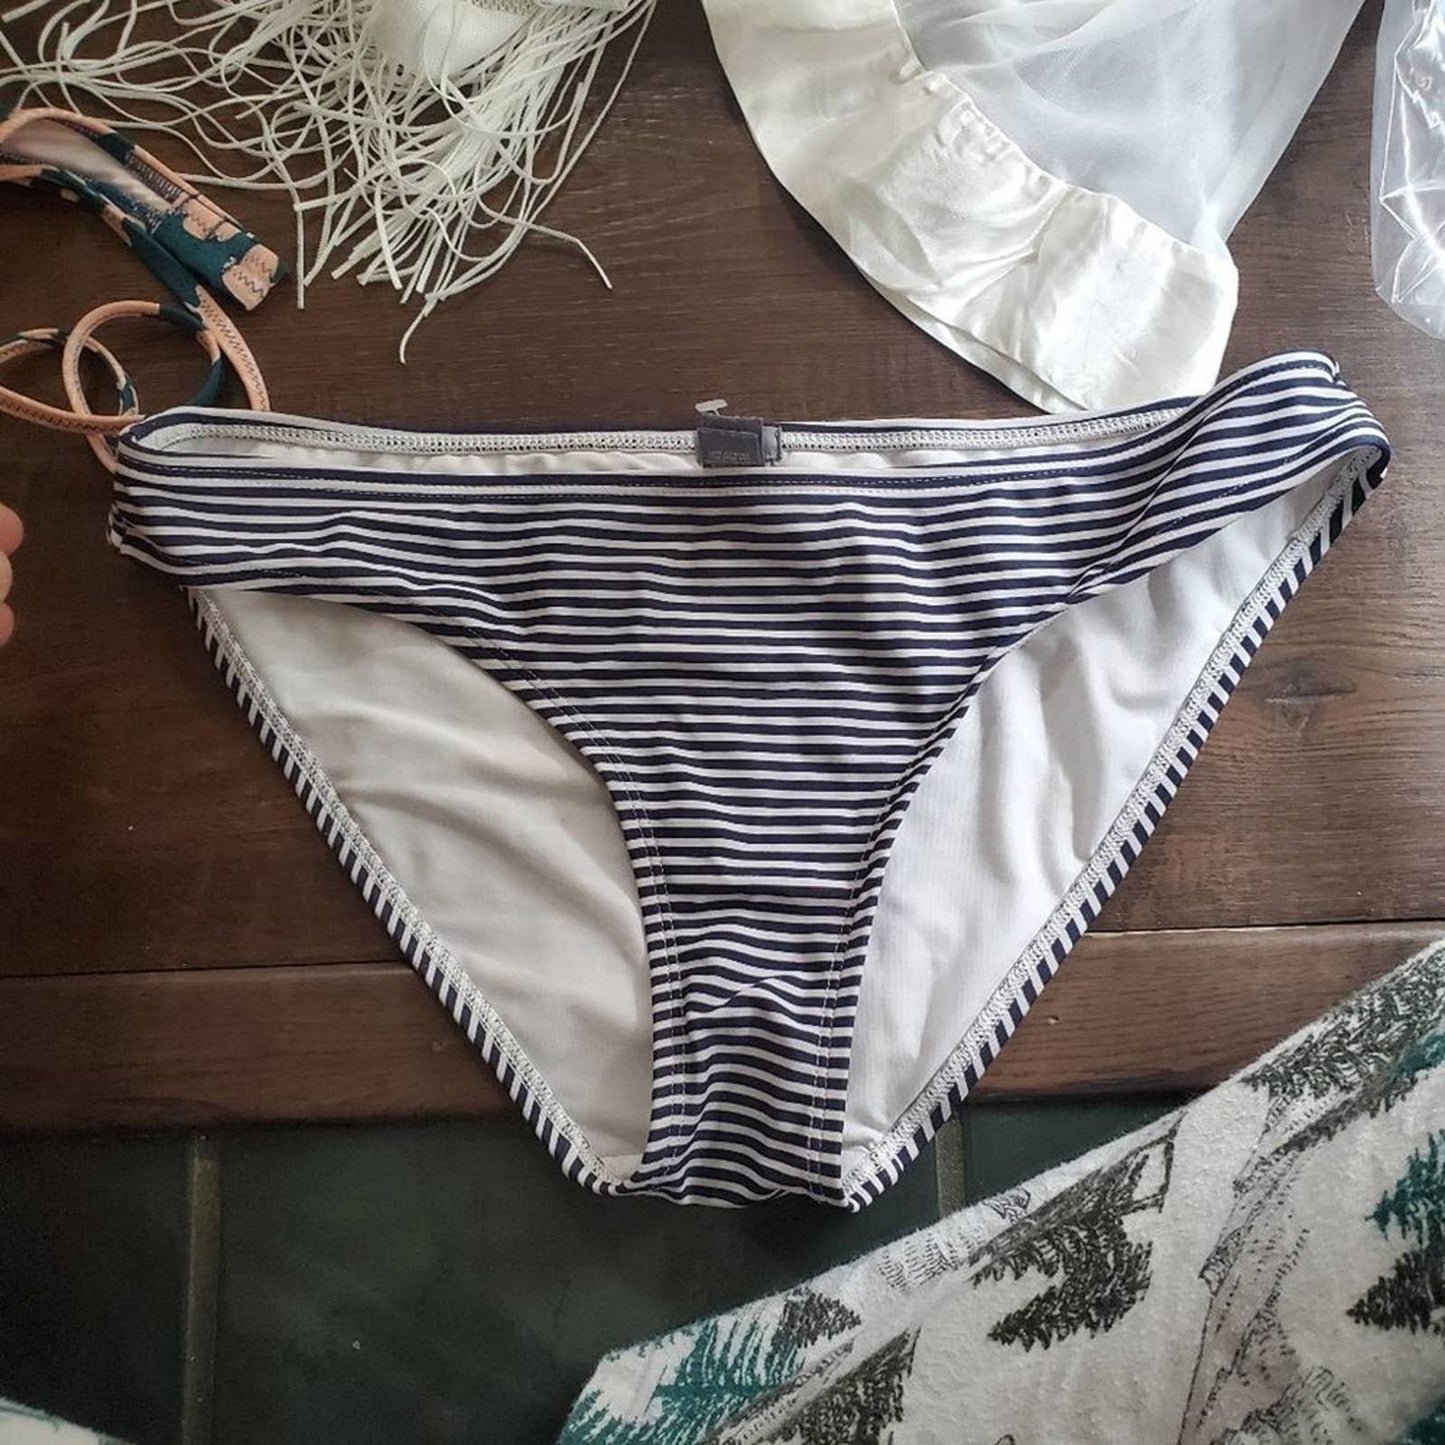 NWOT Aerie Black and White Striped Bikini Bottom - M